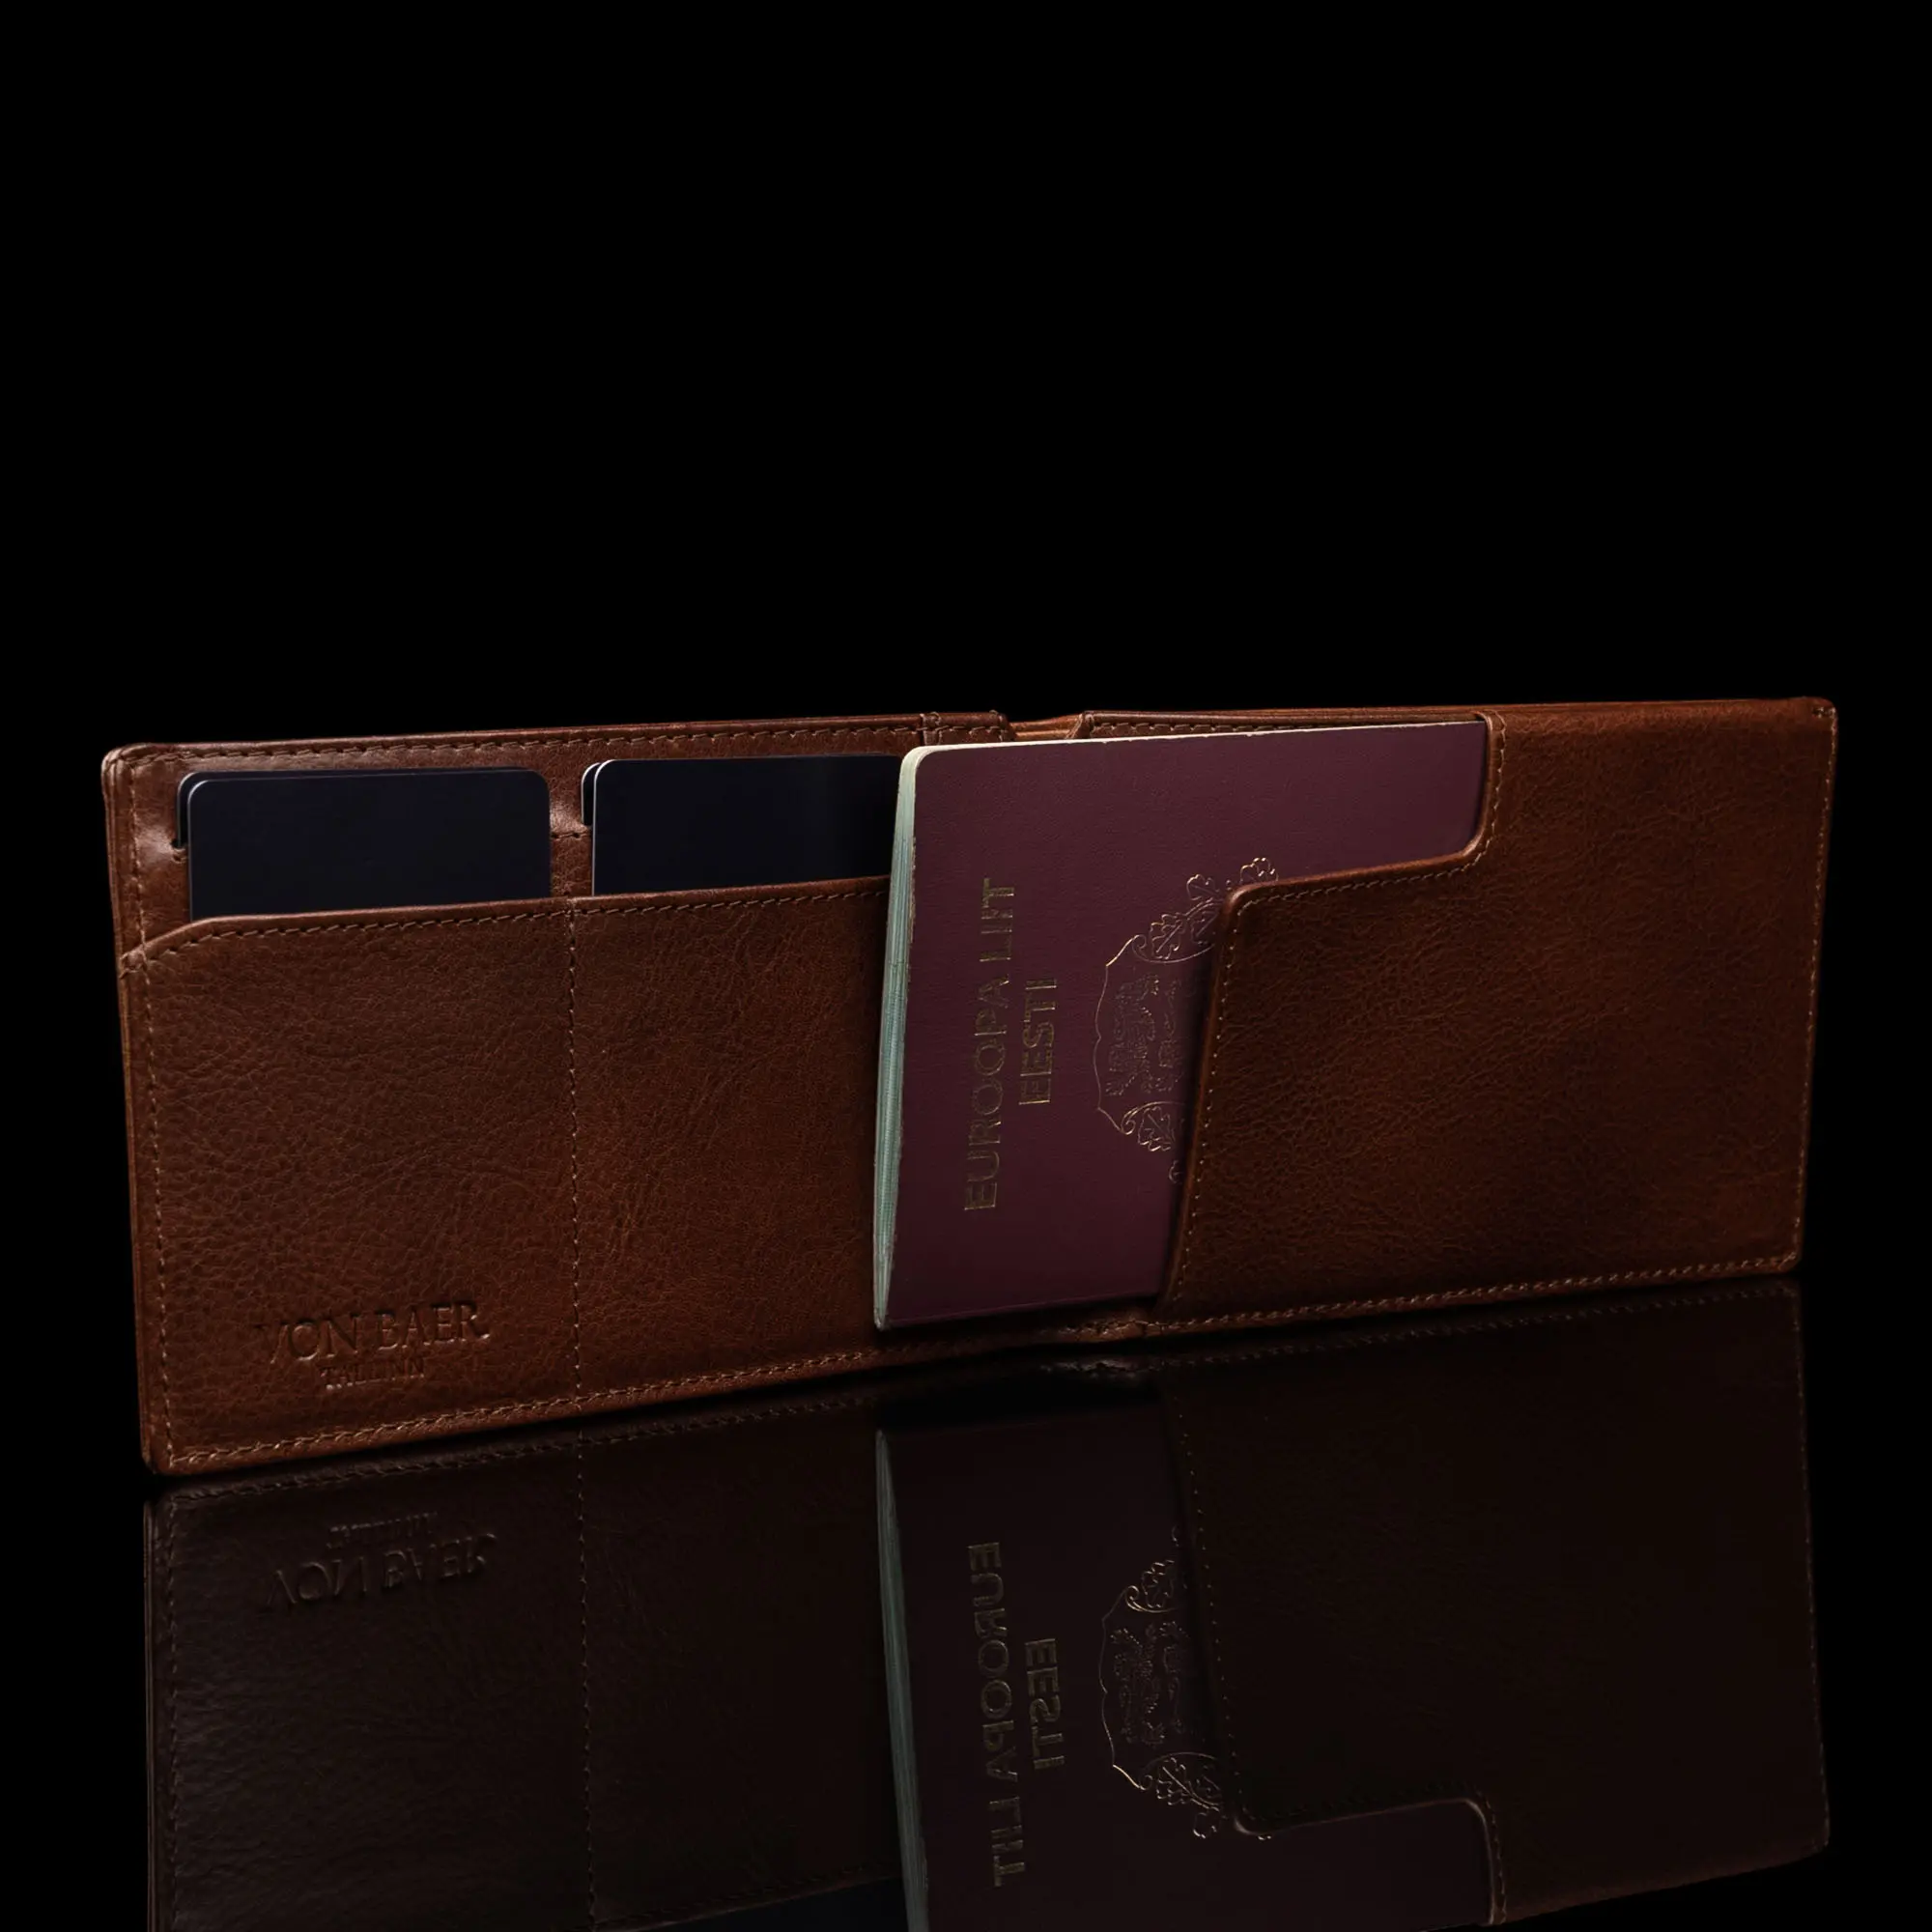 von baer travel organizer premium nahast passihoidja rahakott reisiks käsitsi valmistatud